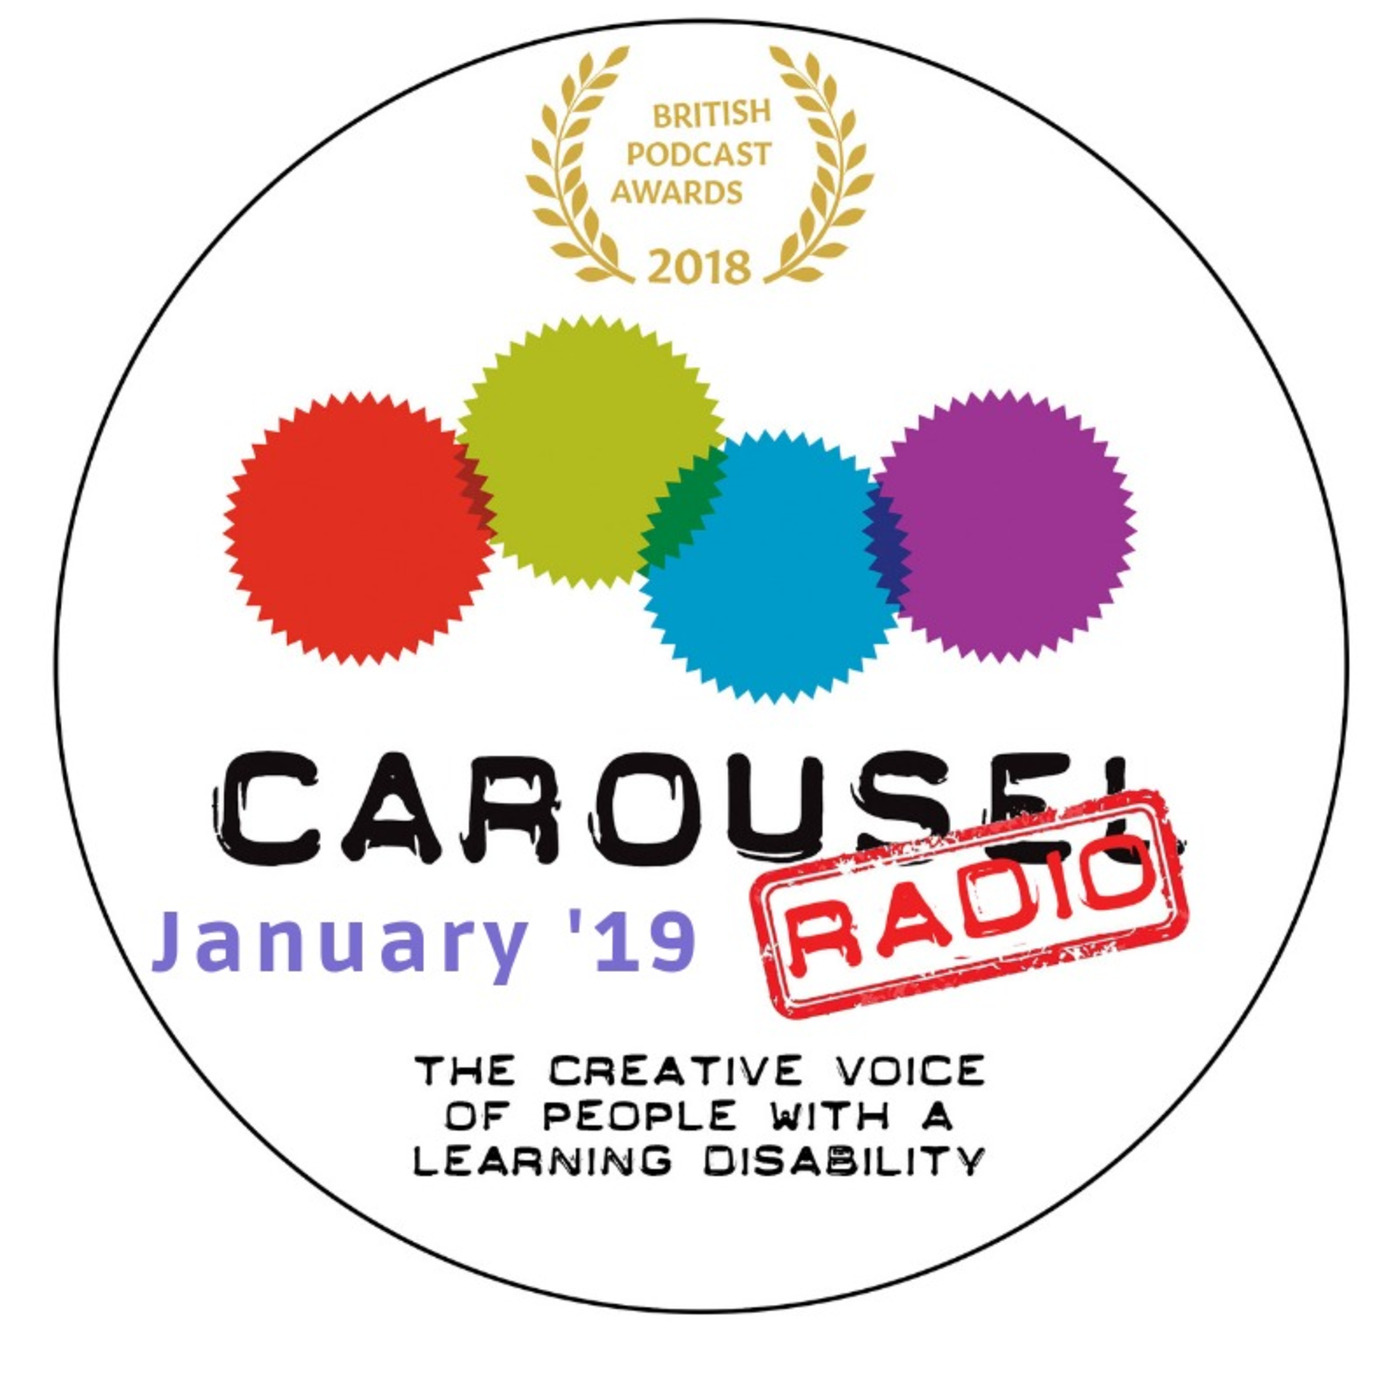 Carousel Radio January 2019